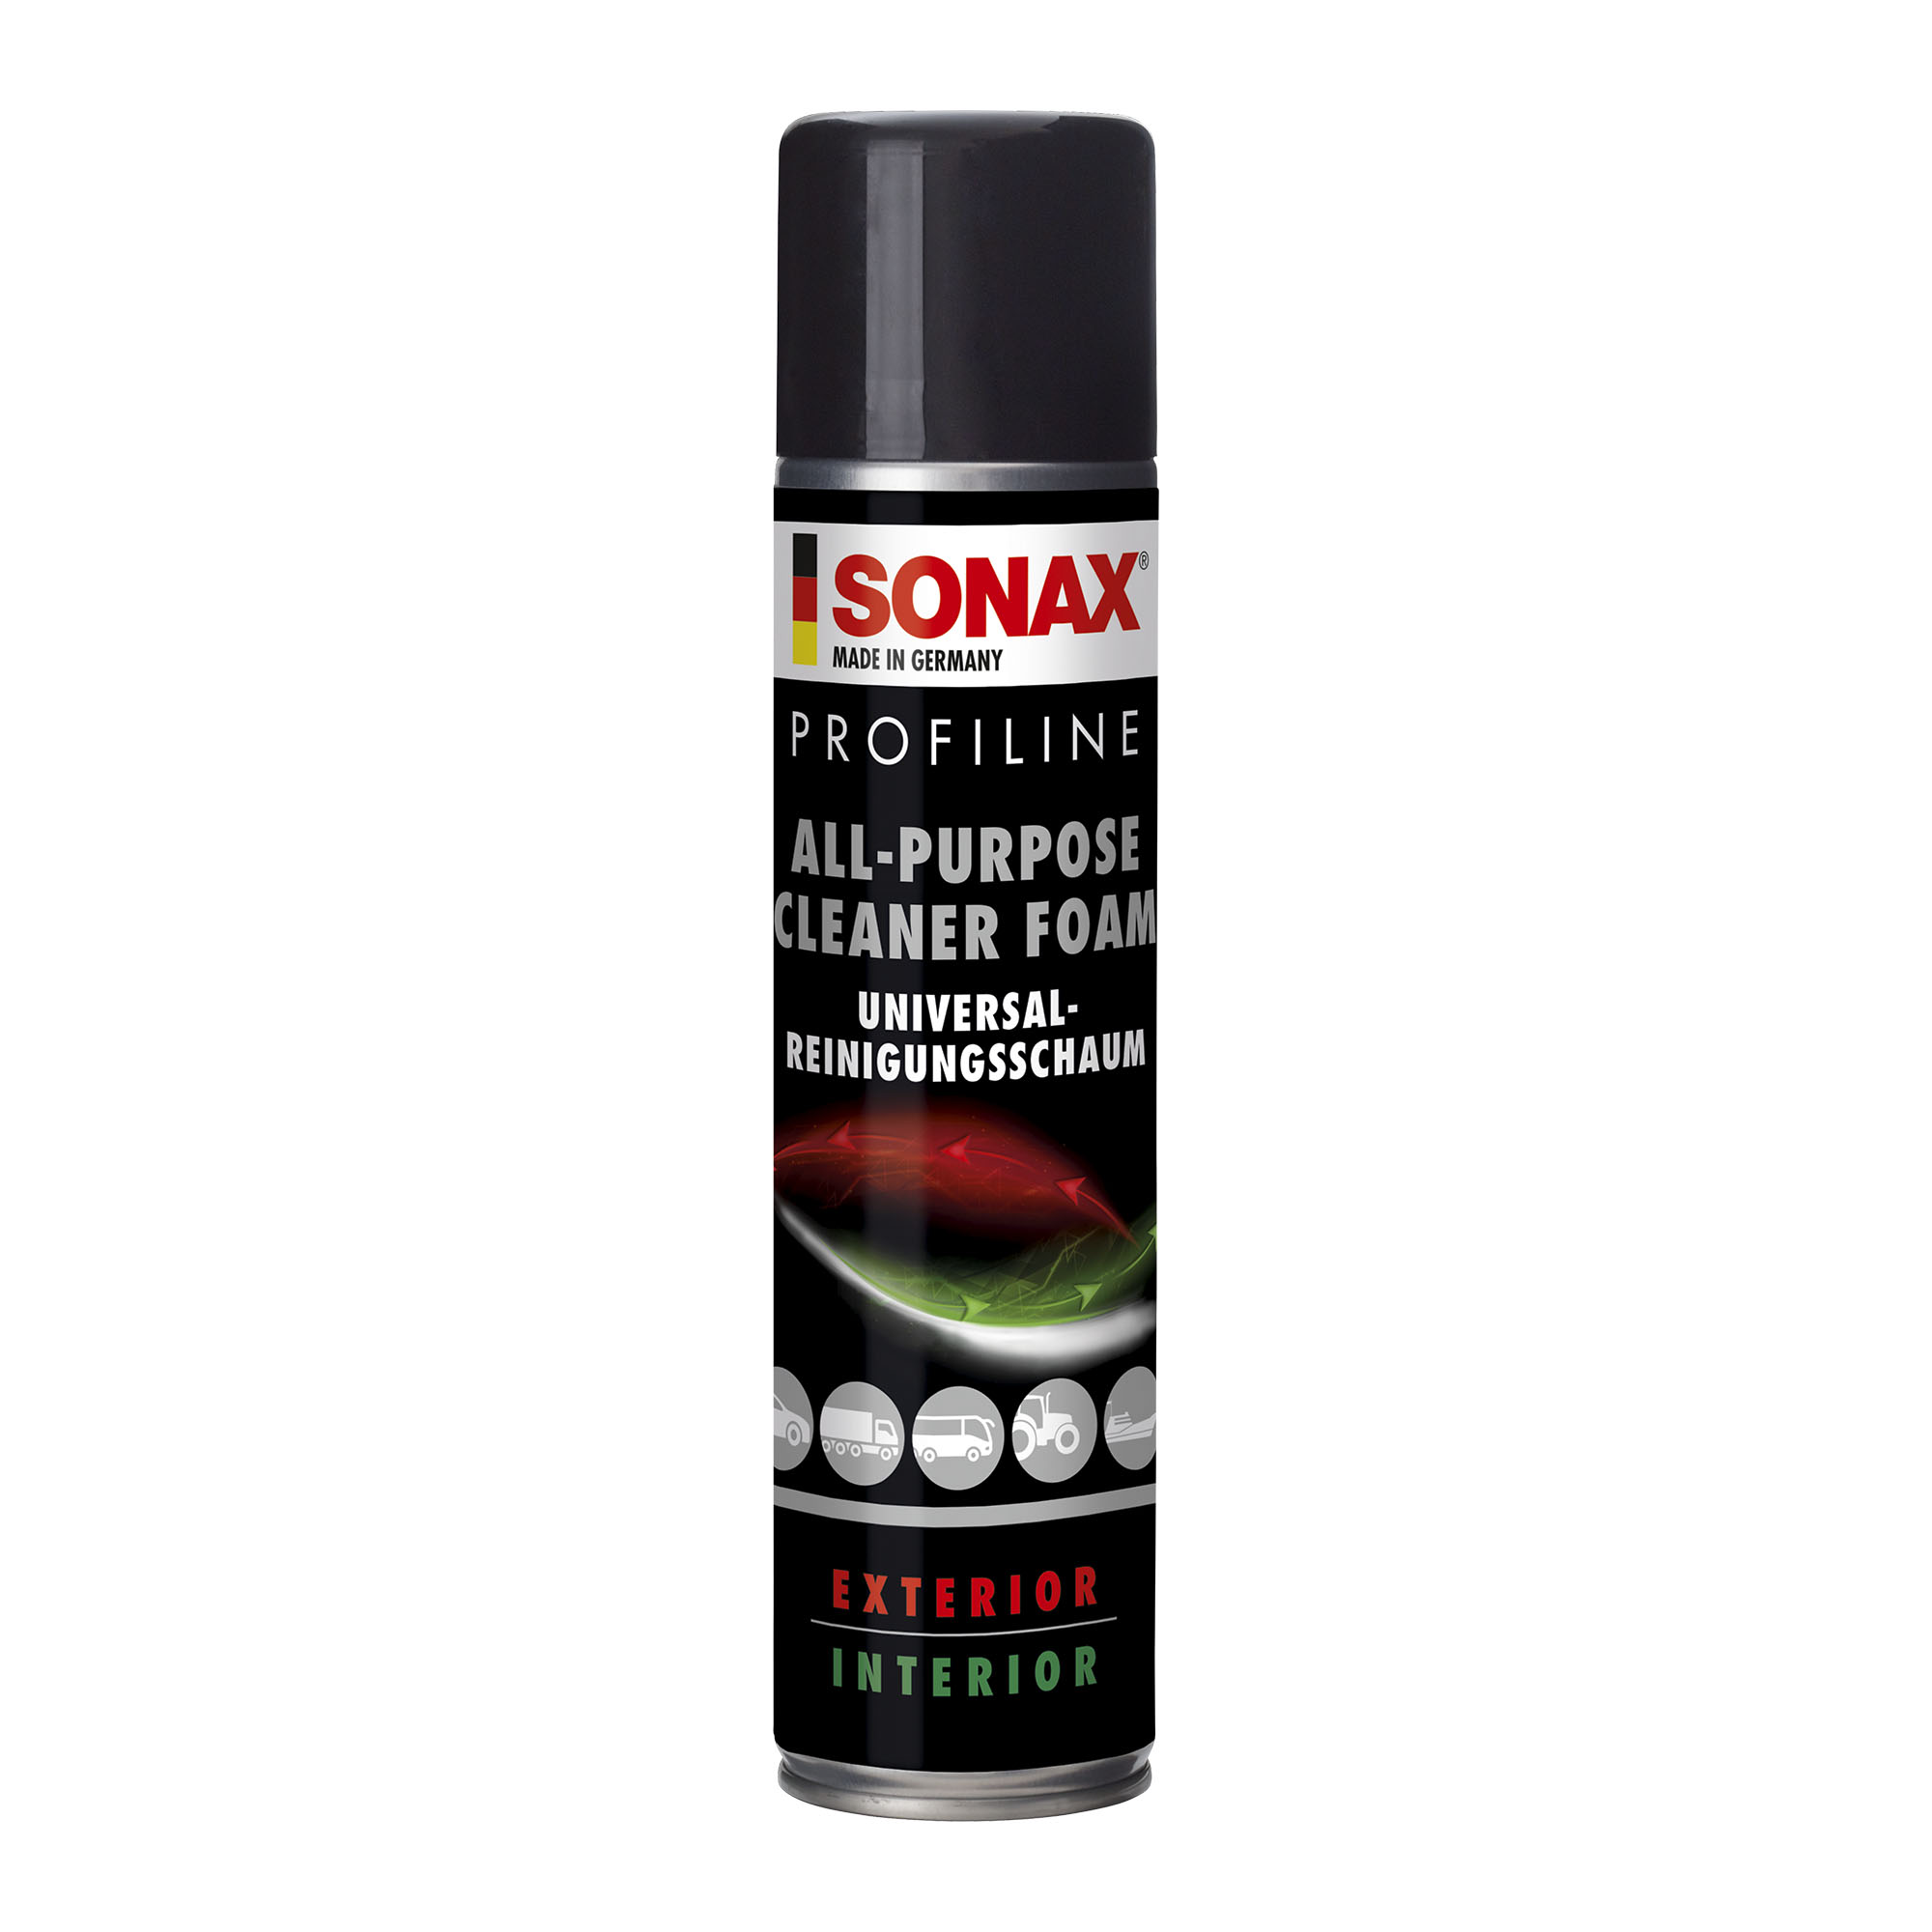 Sonax All-Purpose Cleaner Foam